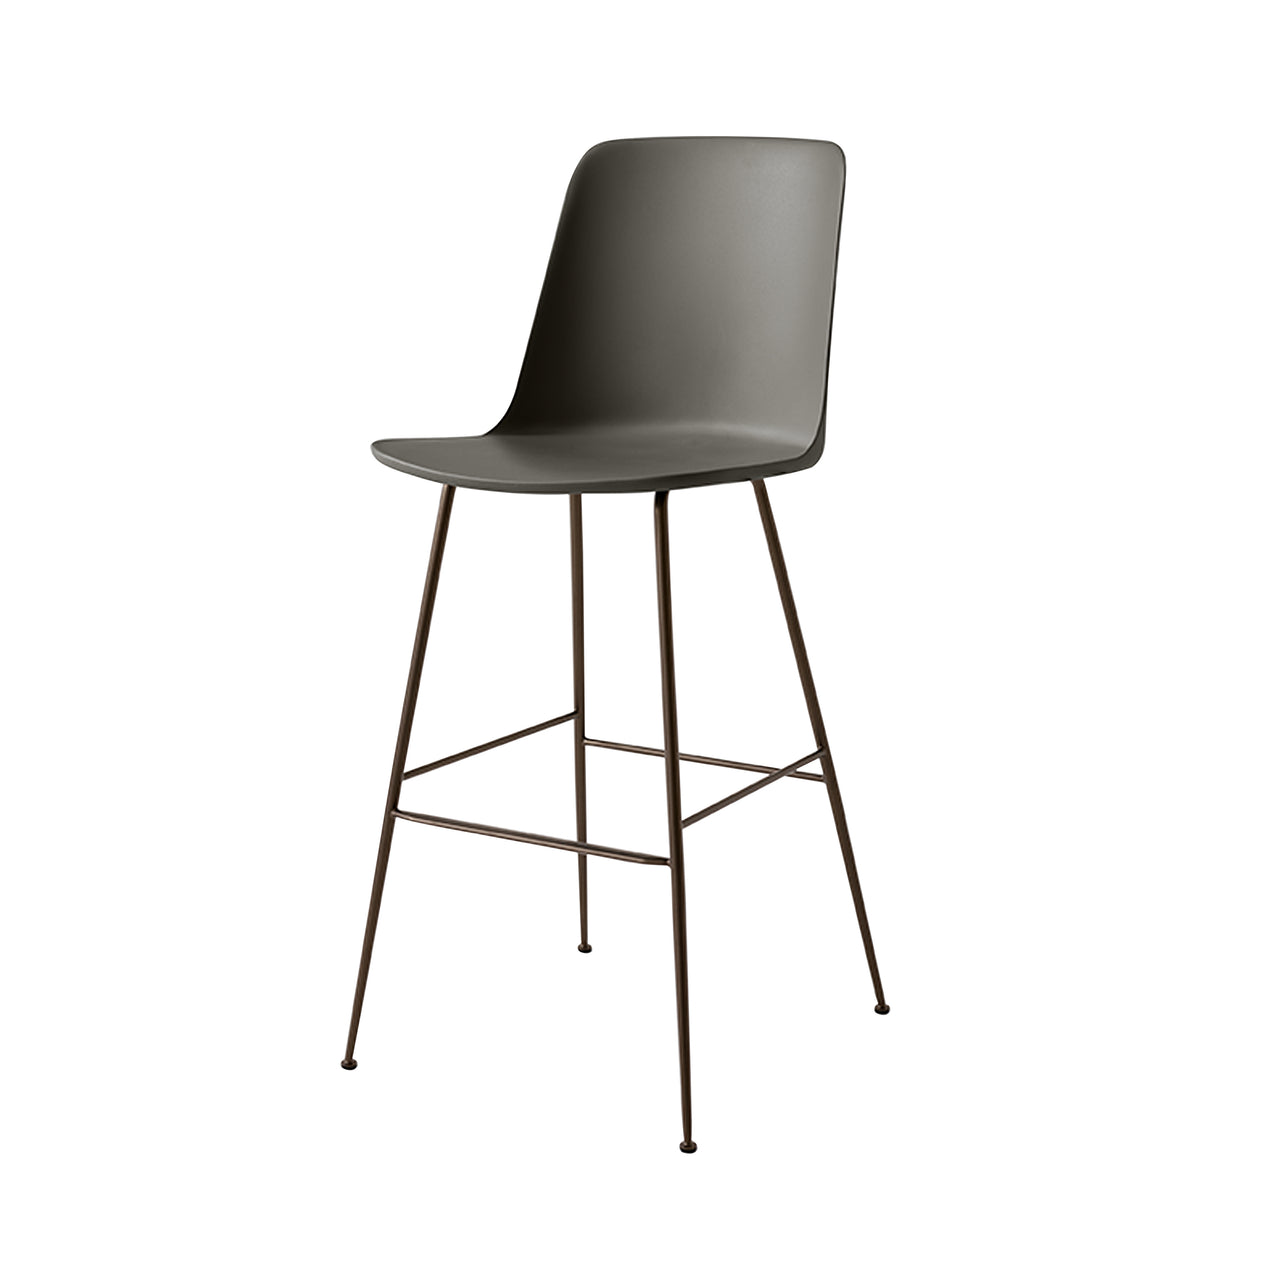 Rely Bar + Counter Highback Chair: HW91 + HW96 + Bar (HW96) + Stone Grey + Bronzed